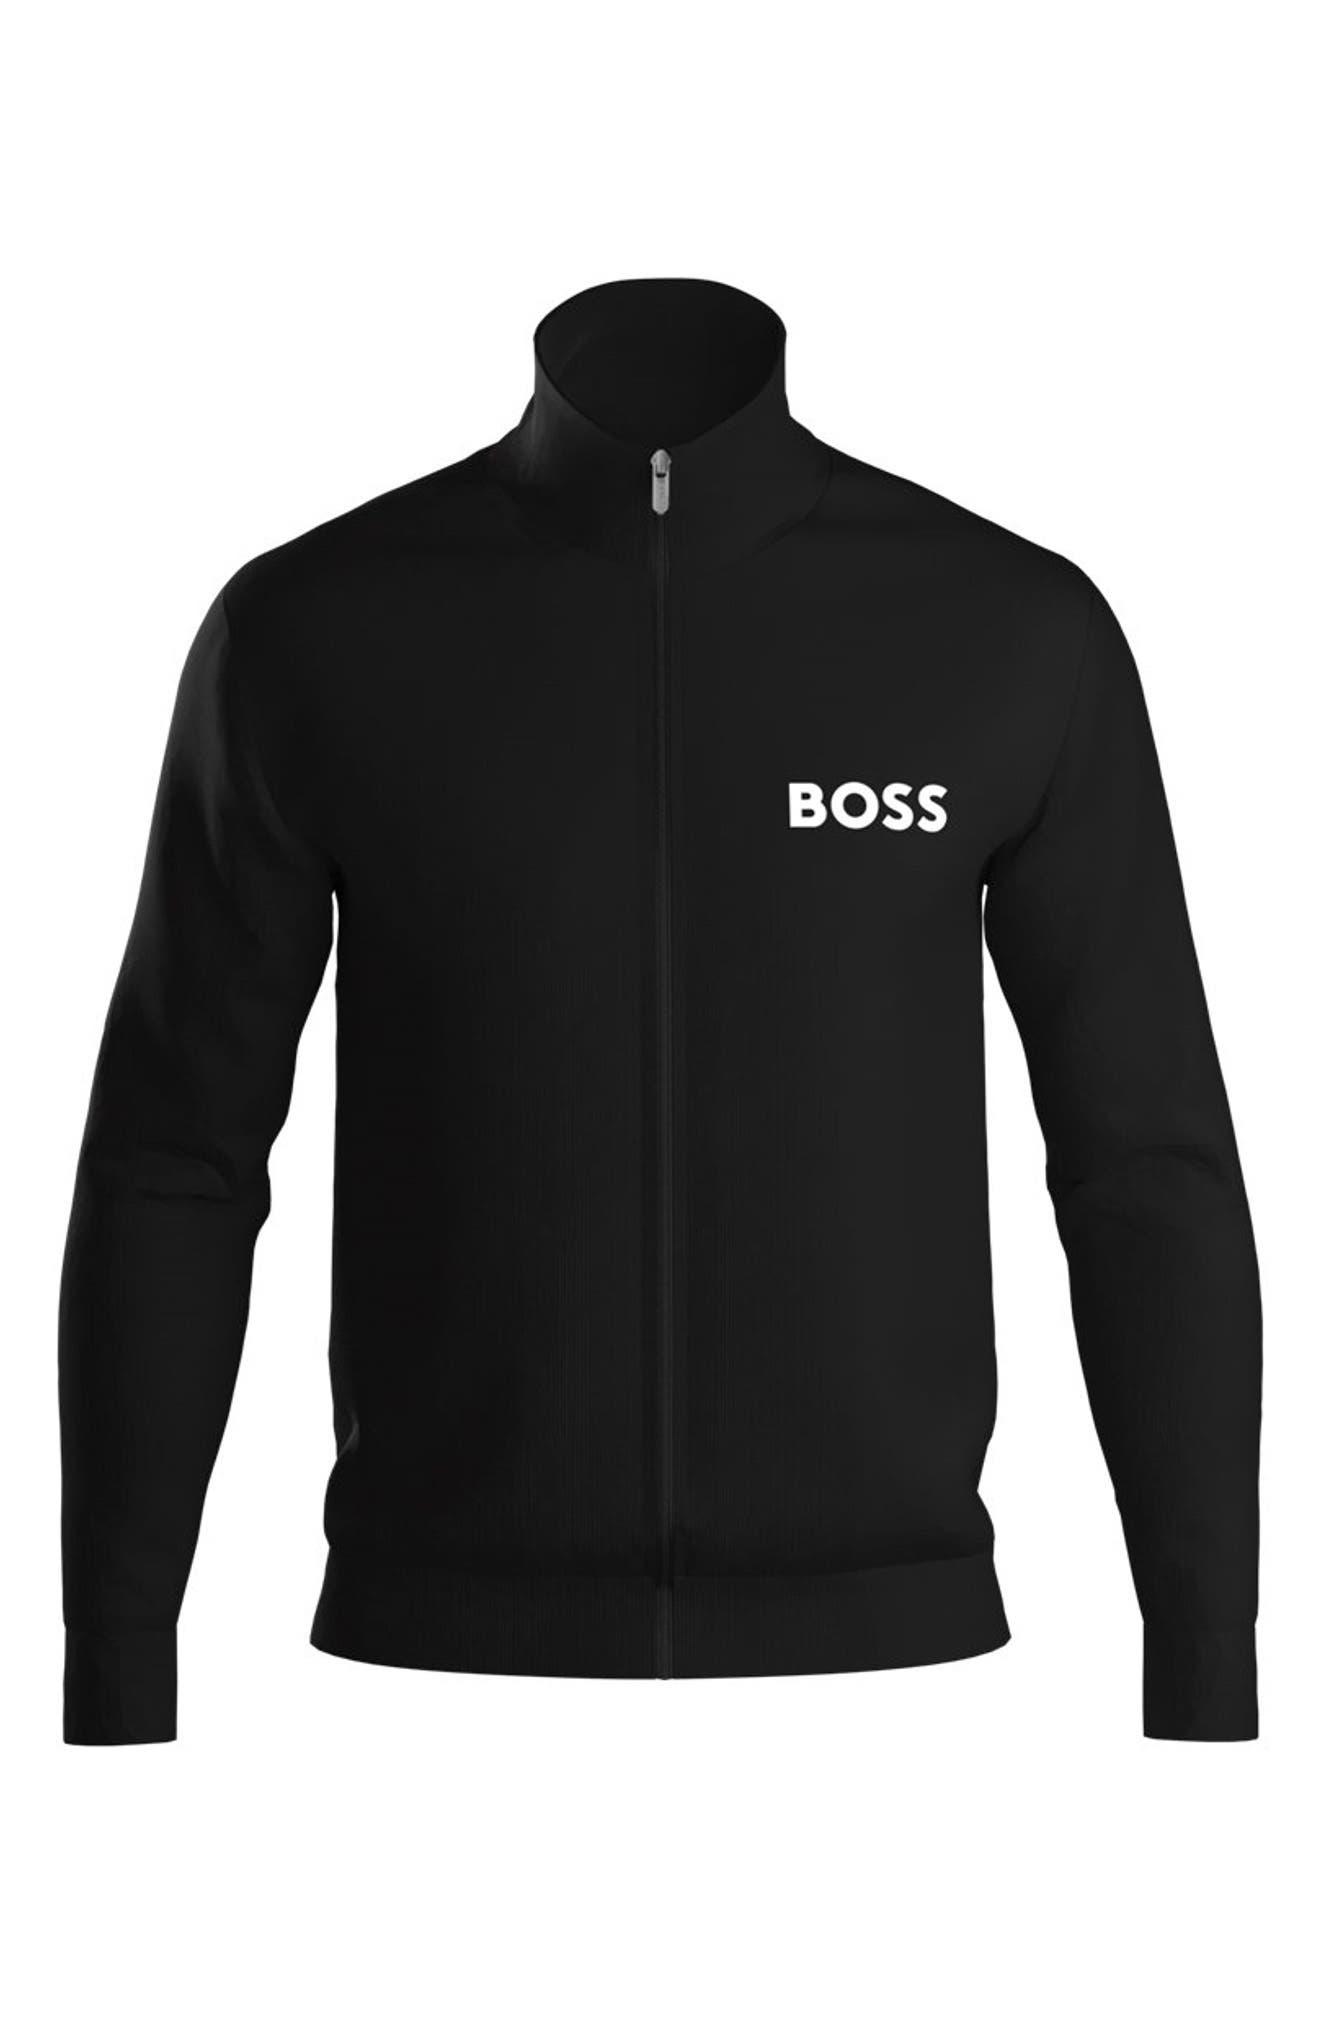 BOSS by HUGO BOSS Ease Track Jacket in Black for Men | Lyst